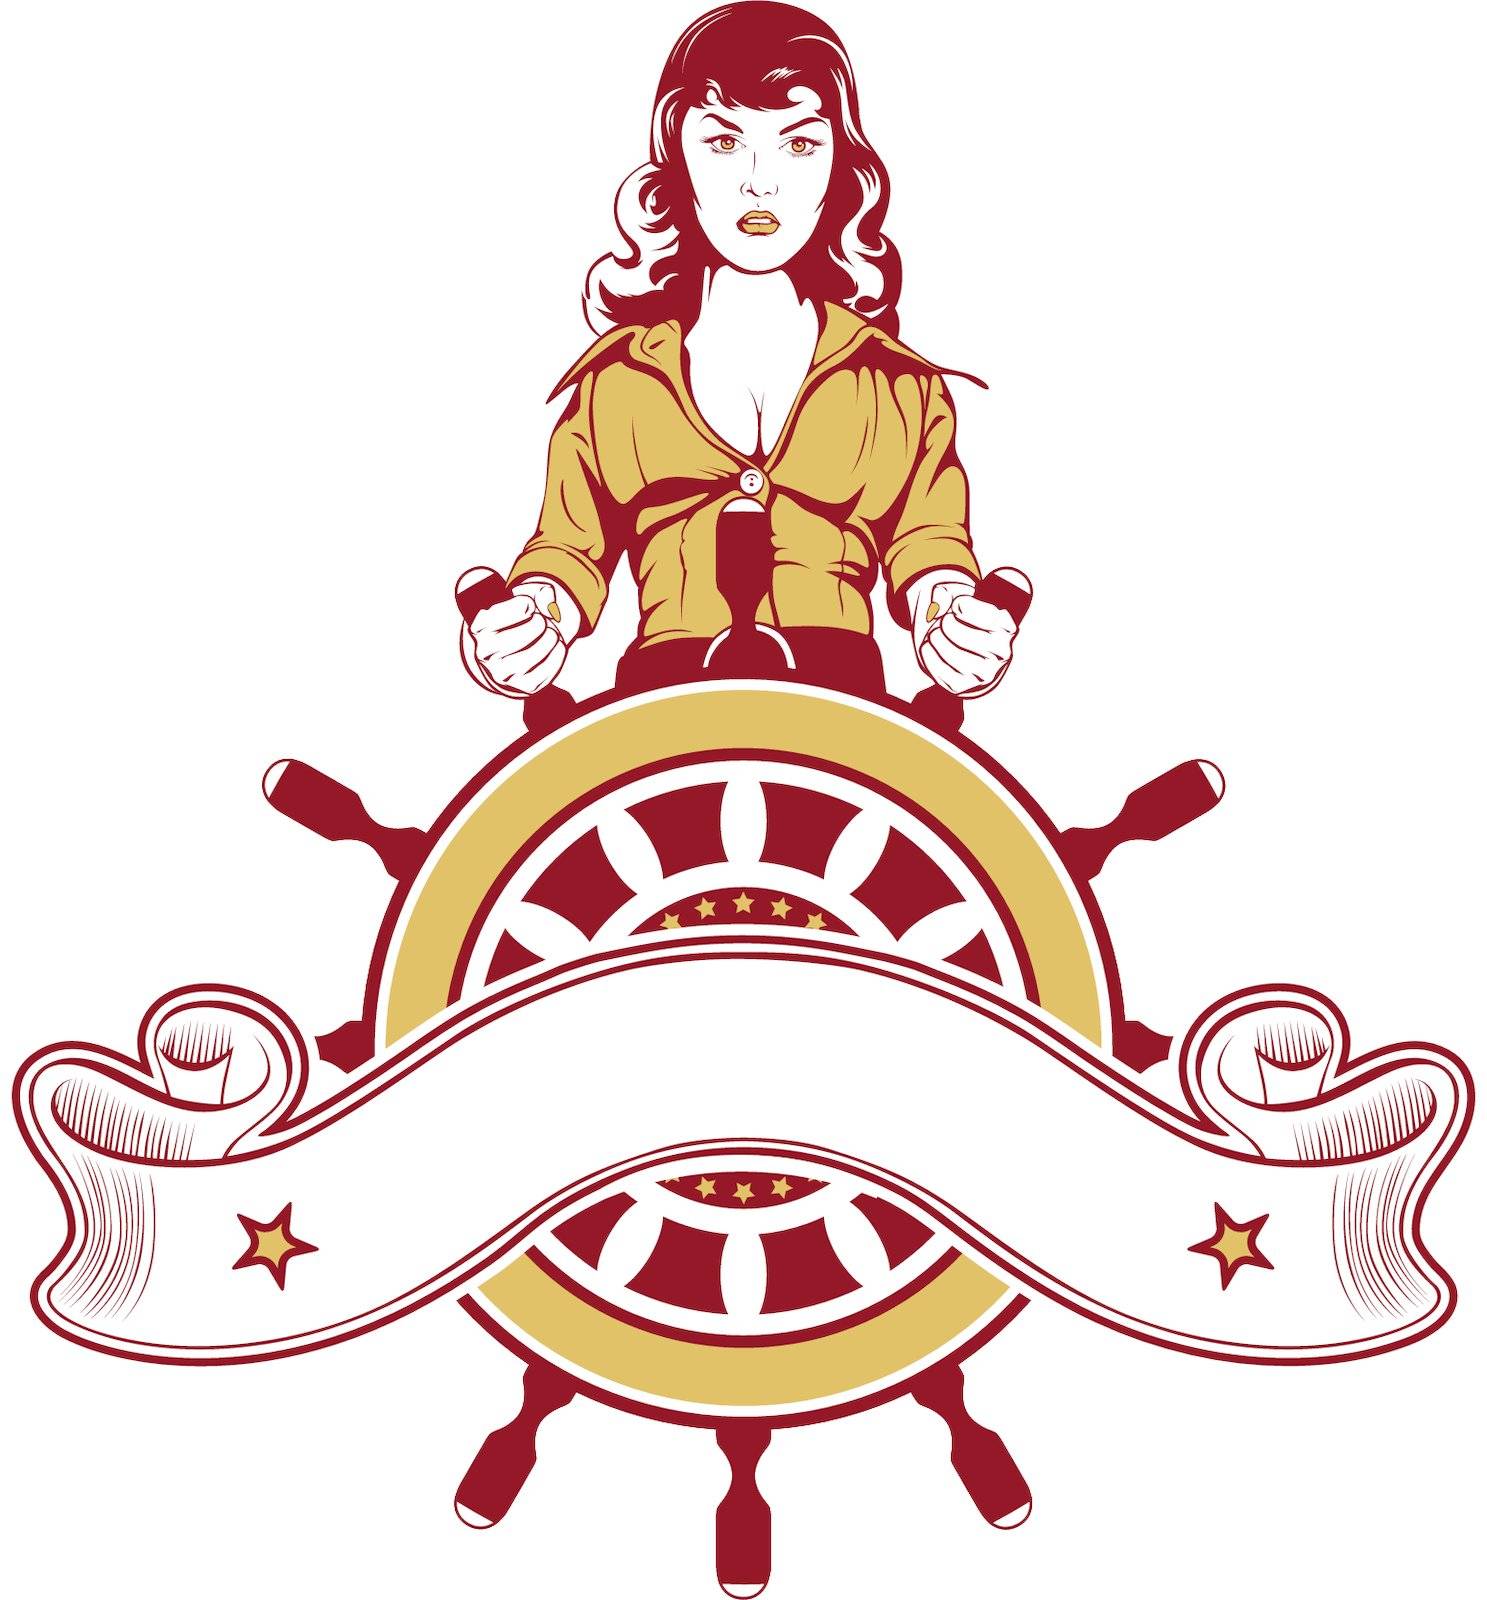 woman sailor emblem by lusik_kolbaskin